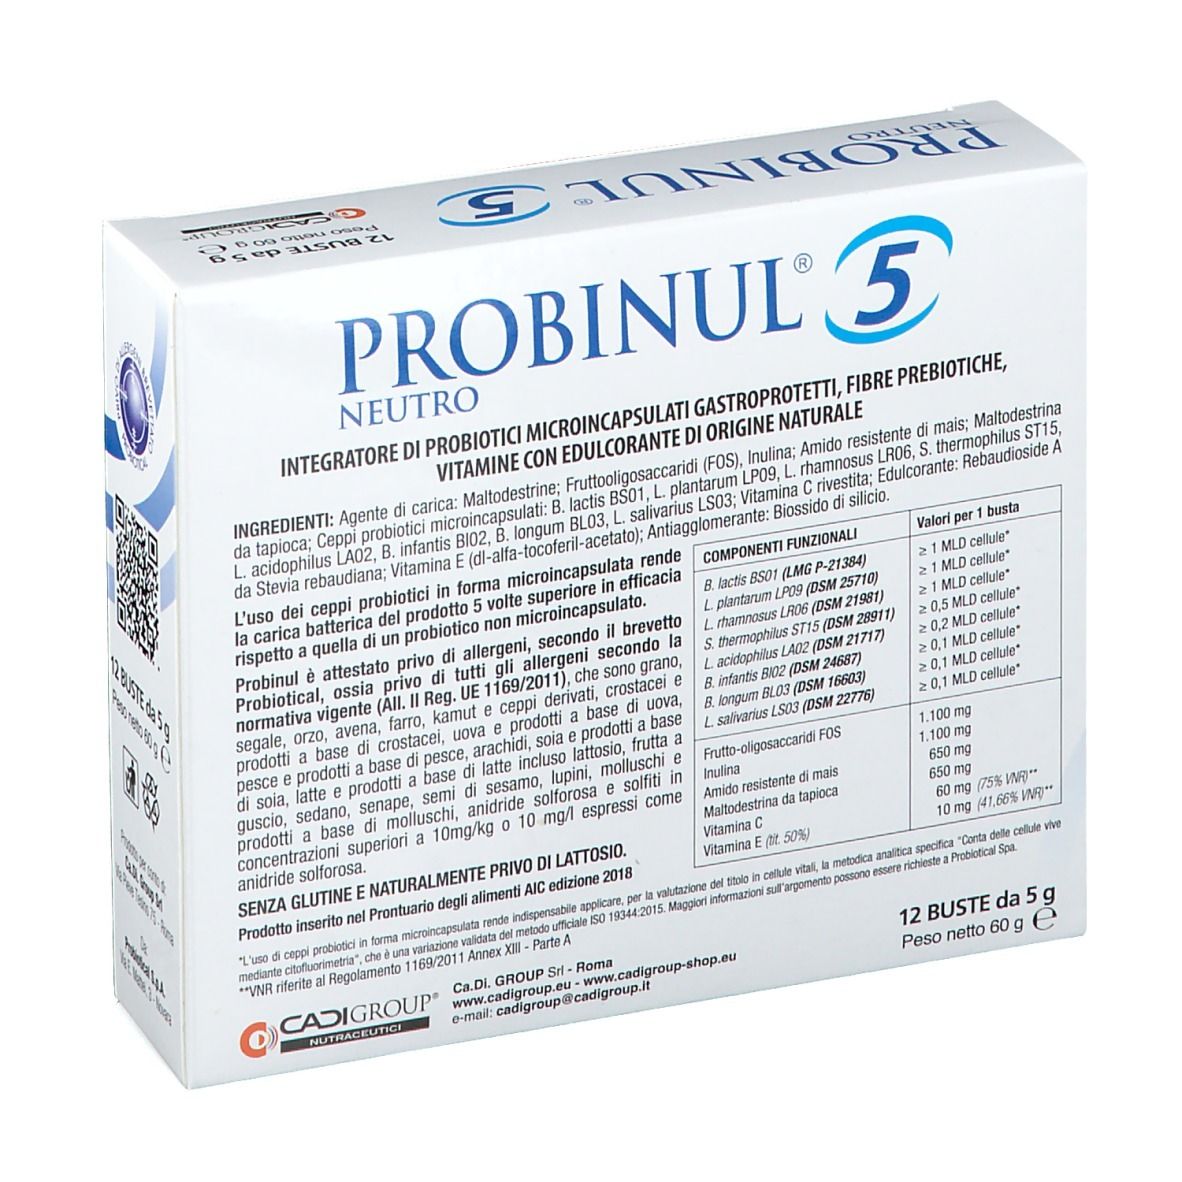 Probinul® 5 Neutro